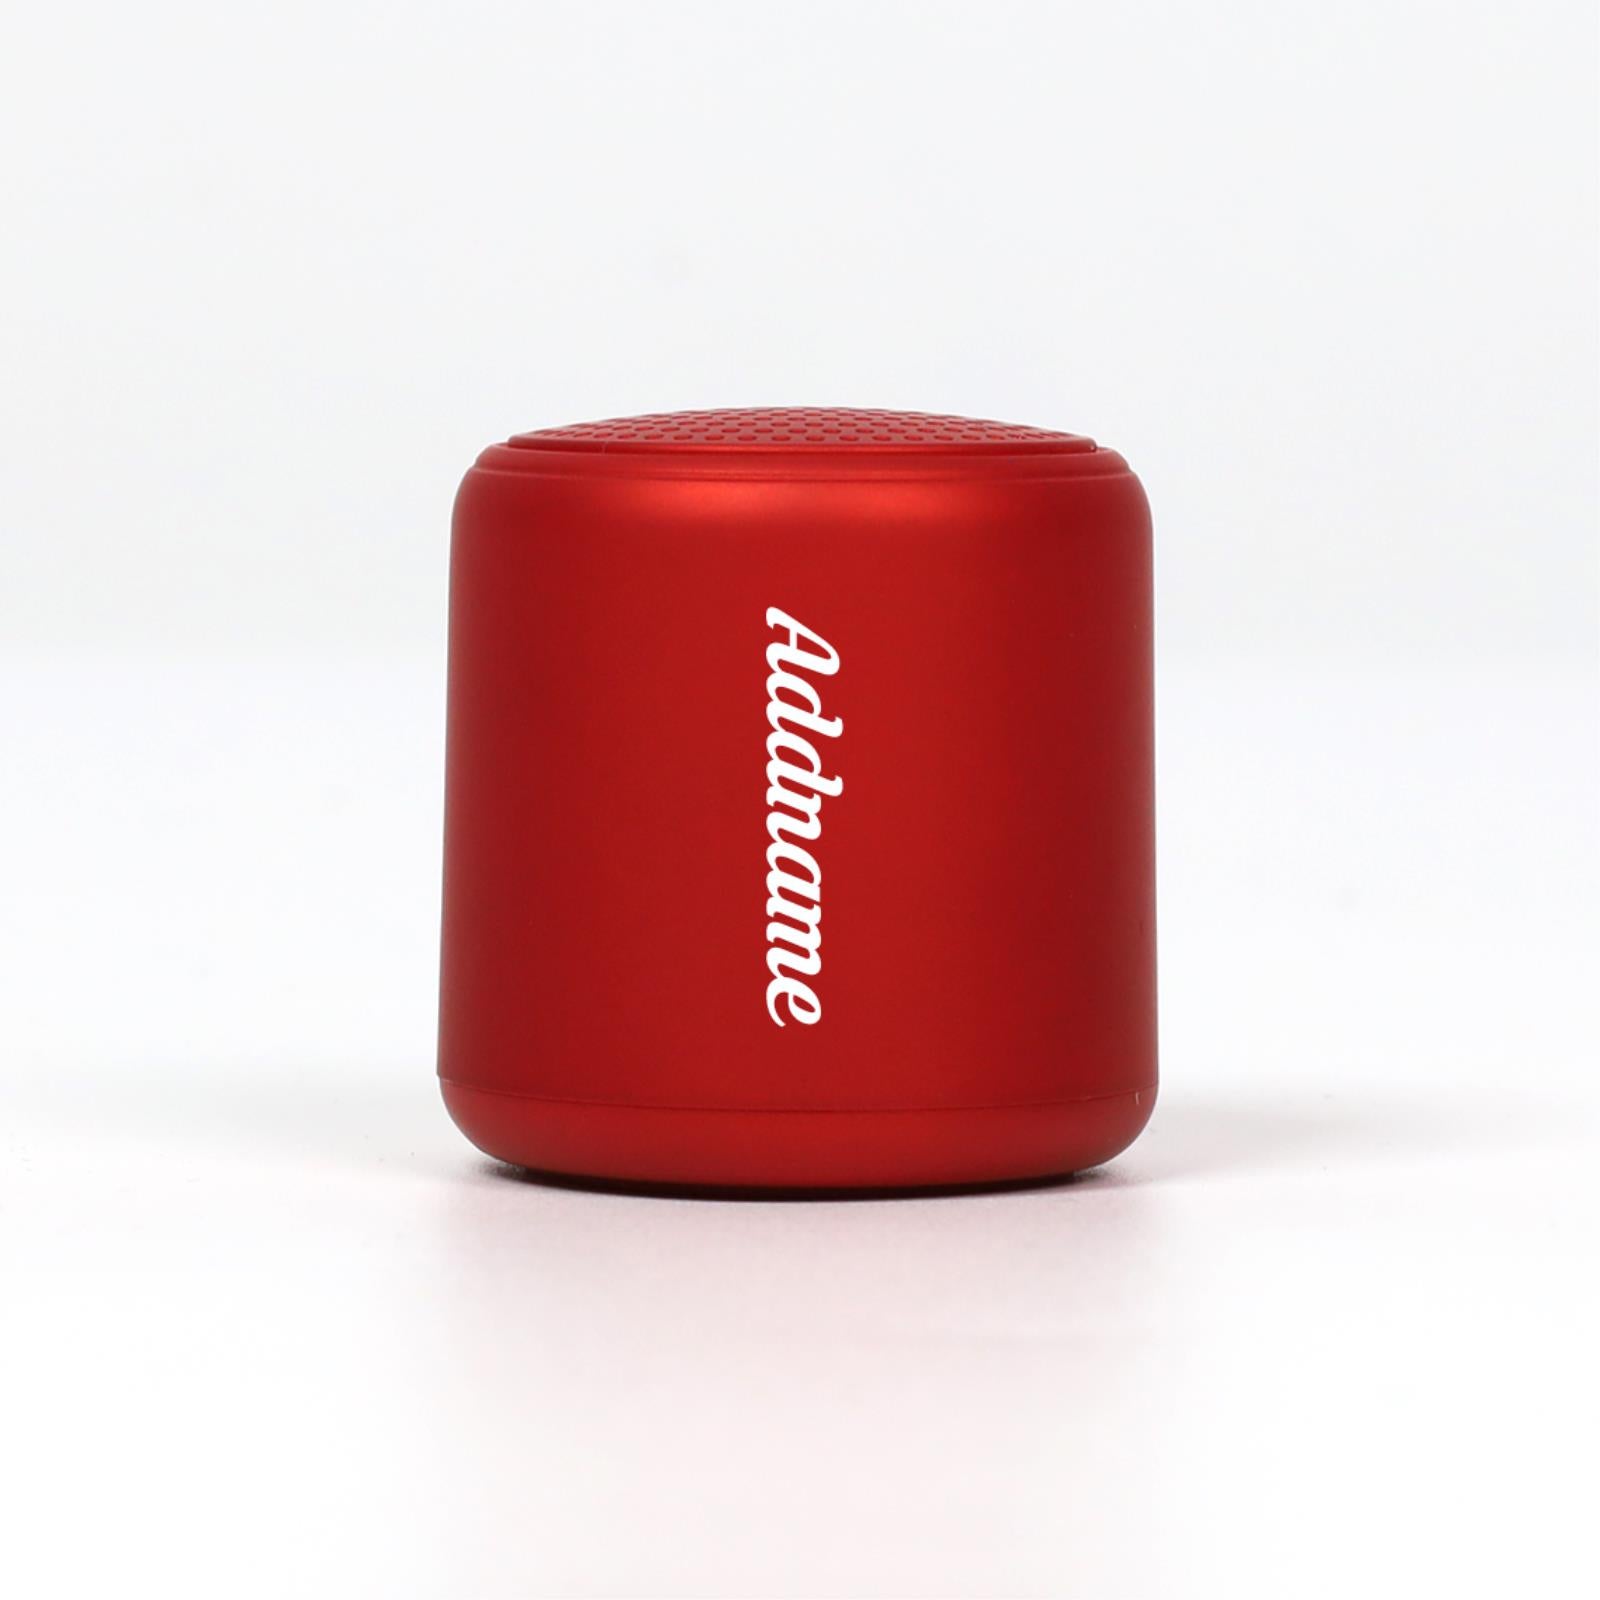 Altra Smart Mini Wireless Speaker - Red